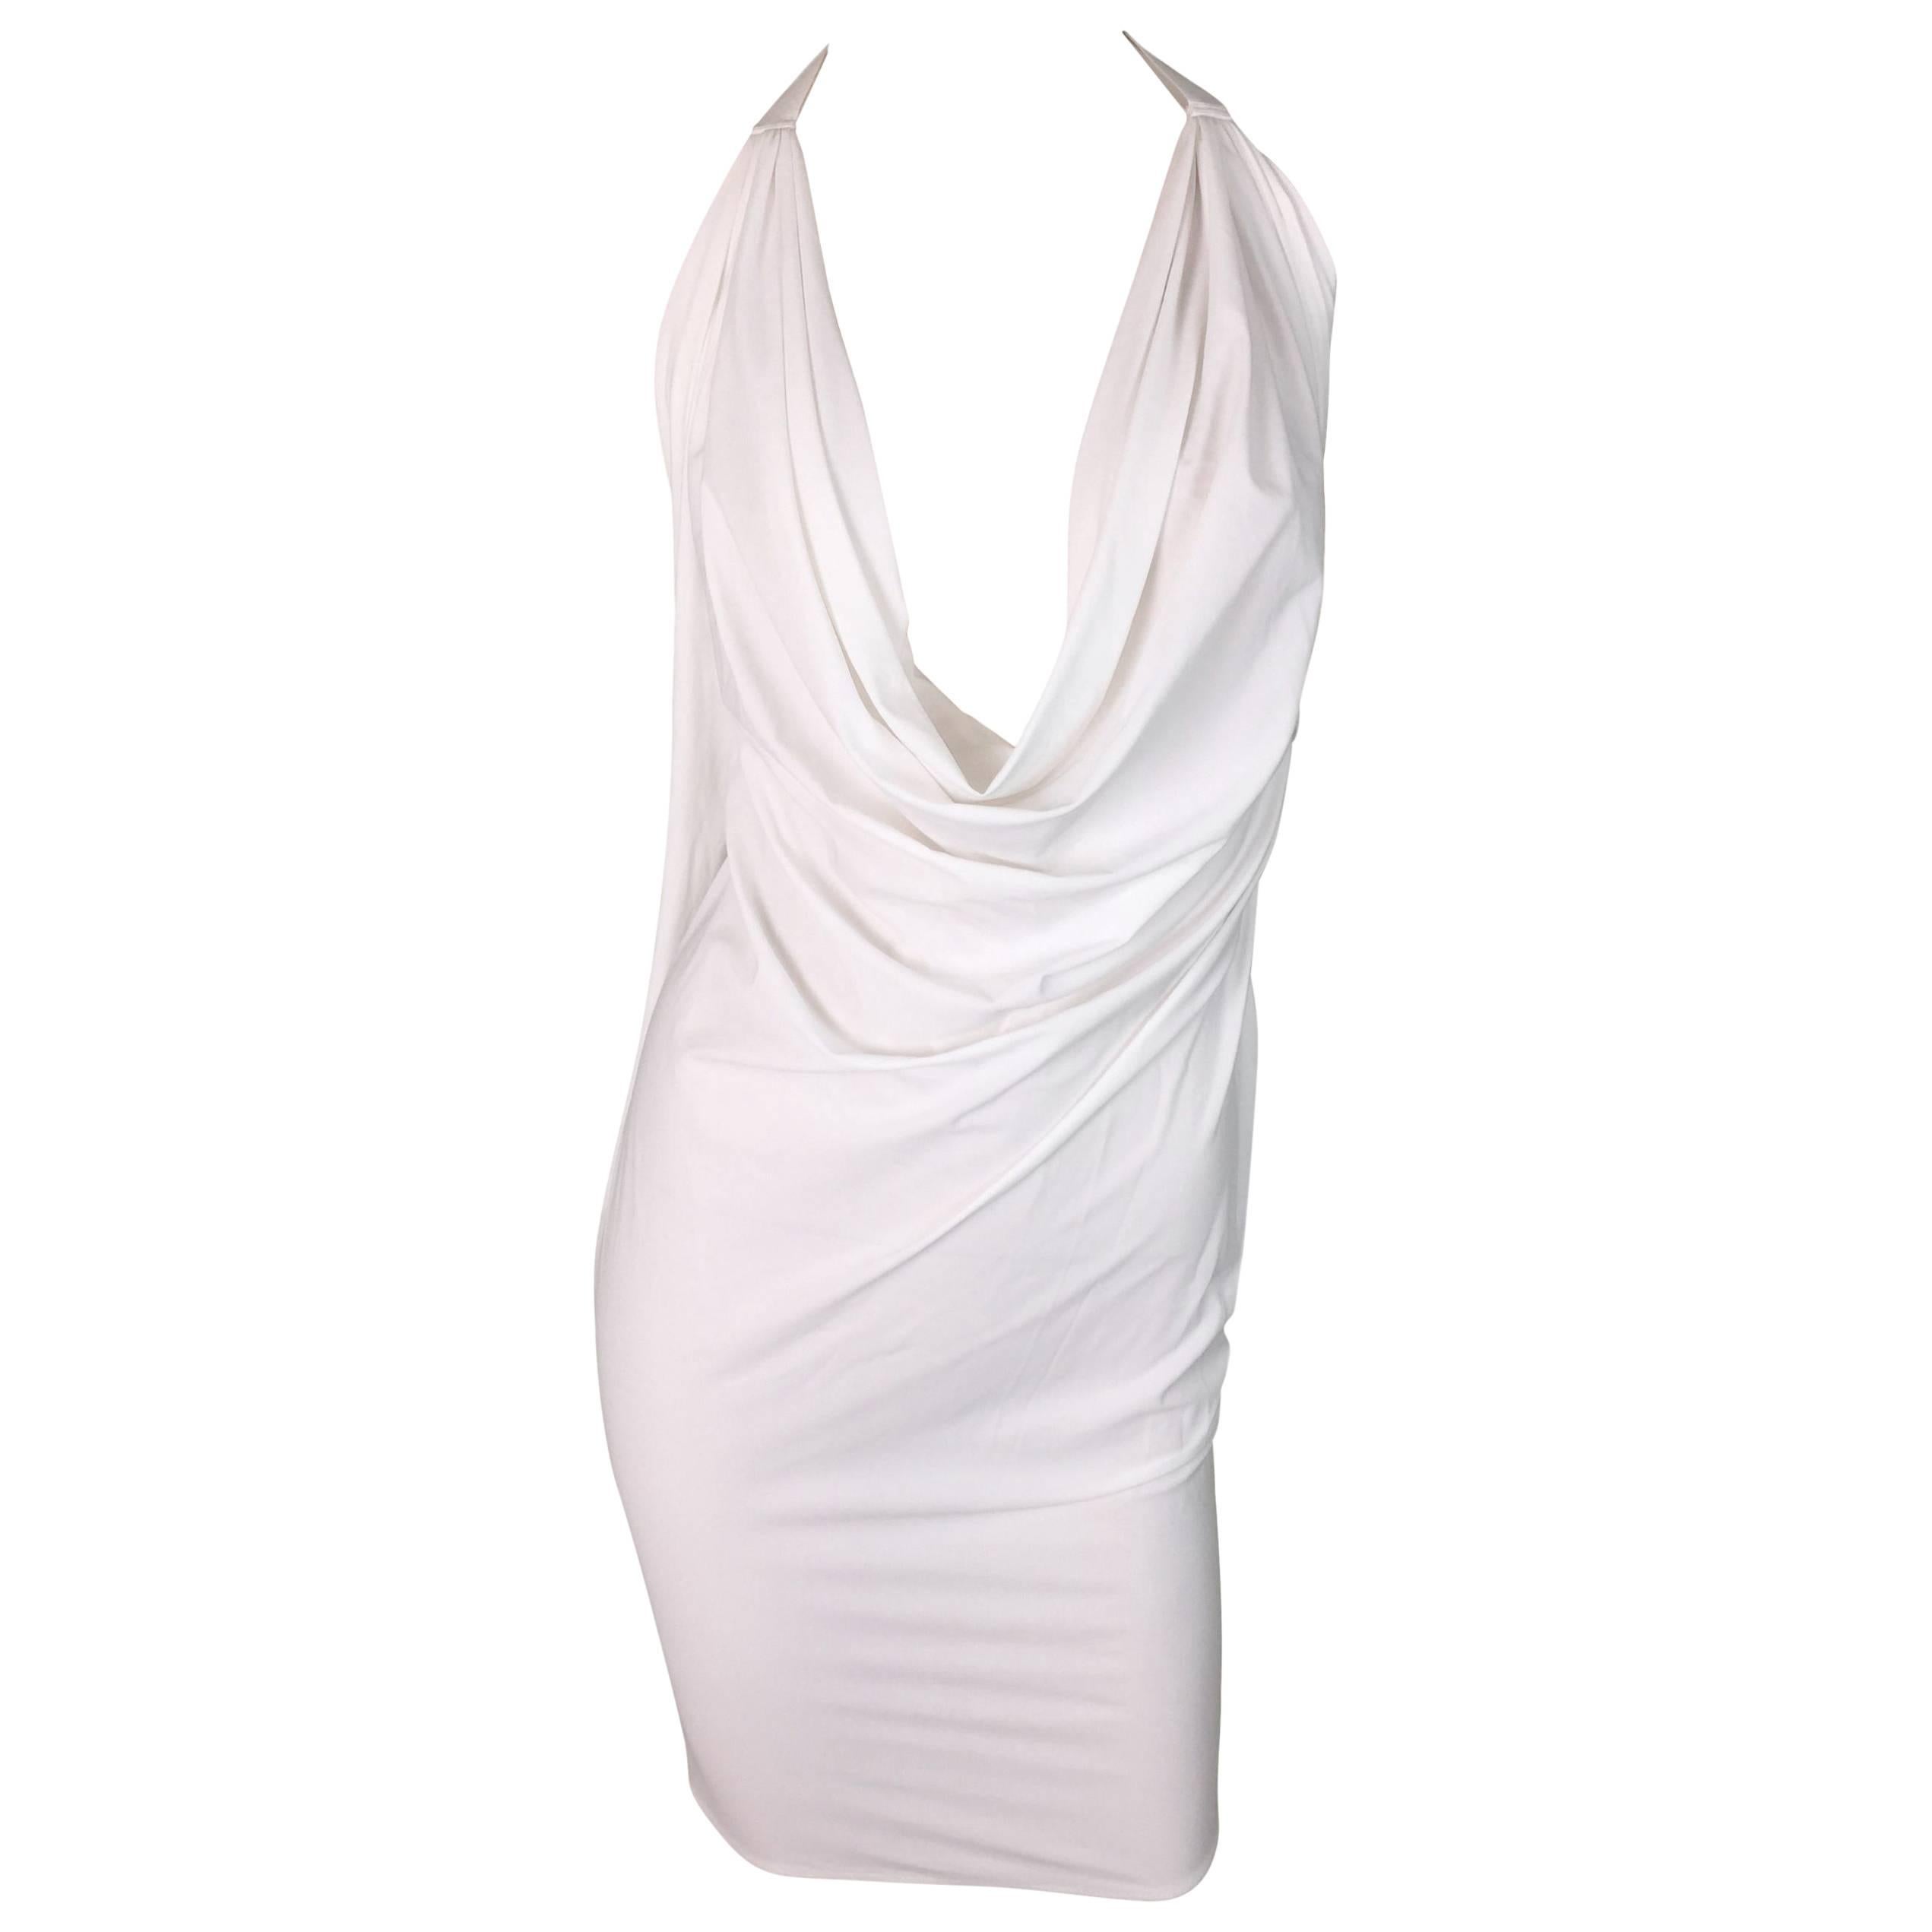 NWT Jean Paul Gaultier for La Perla Sheer White Plunging Halter Dress 42